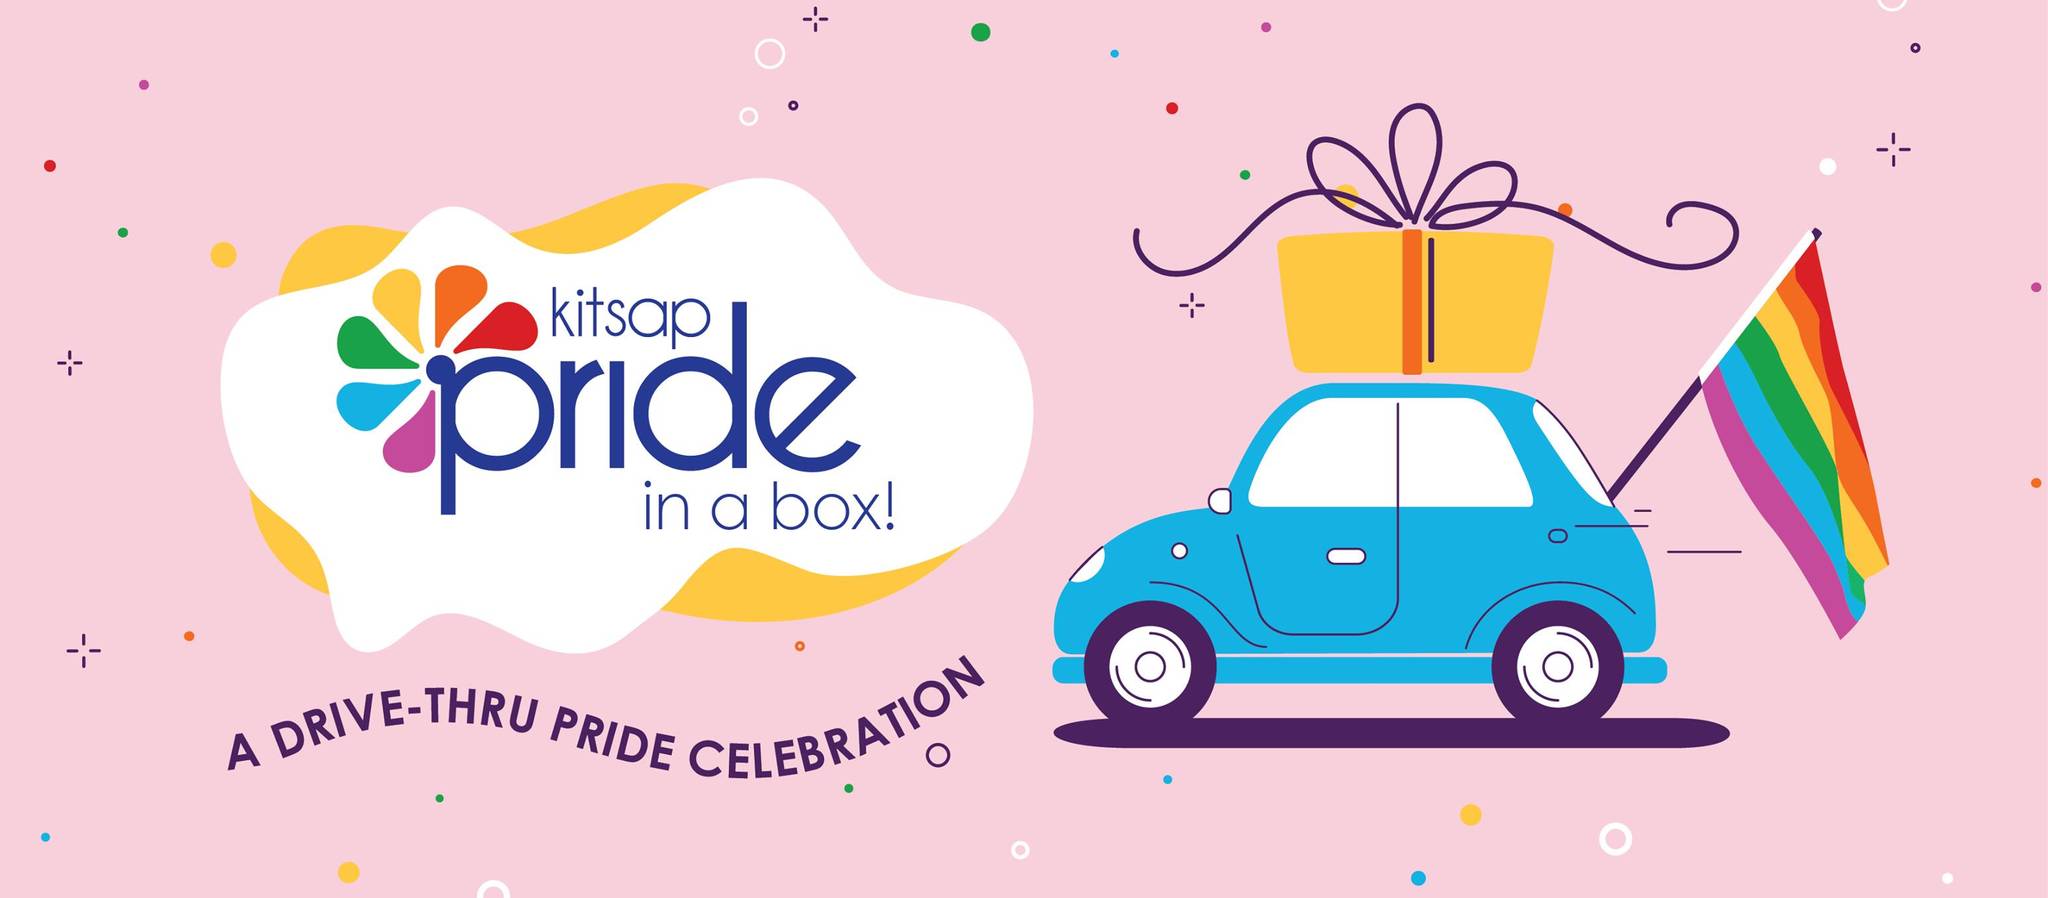 Kitsap Pride to hold drive-thru celebration Saturday